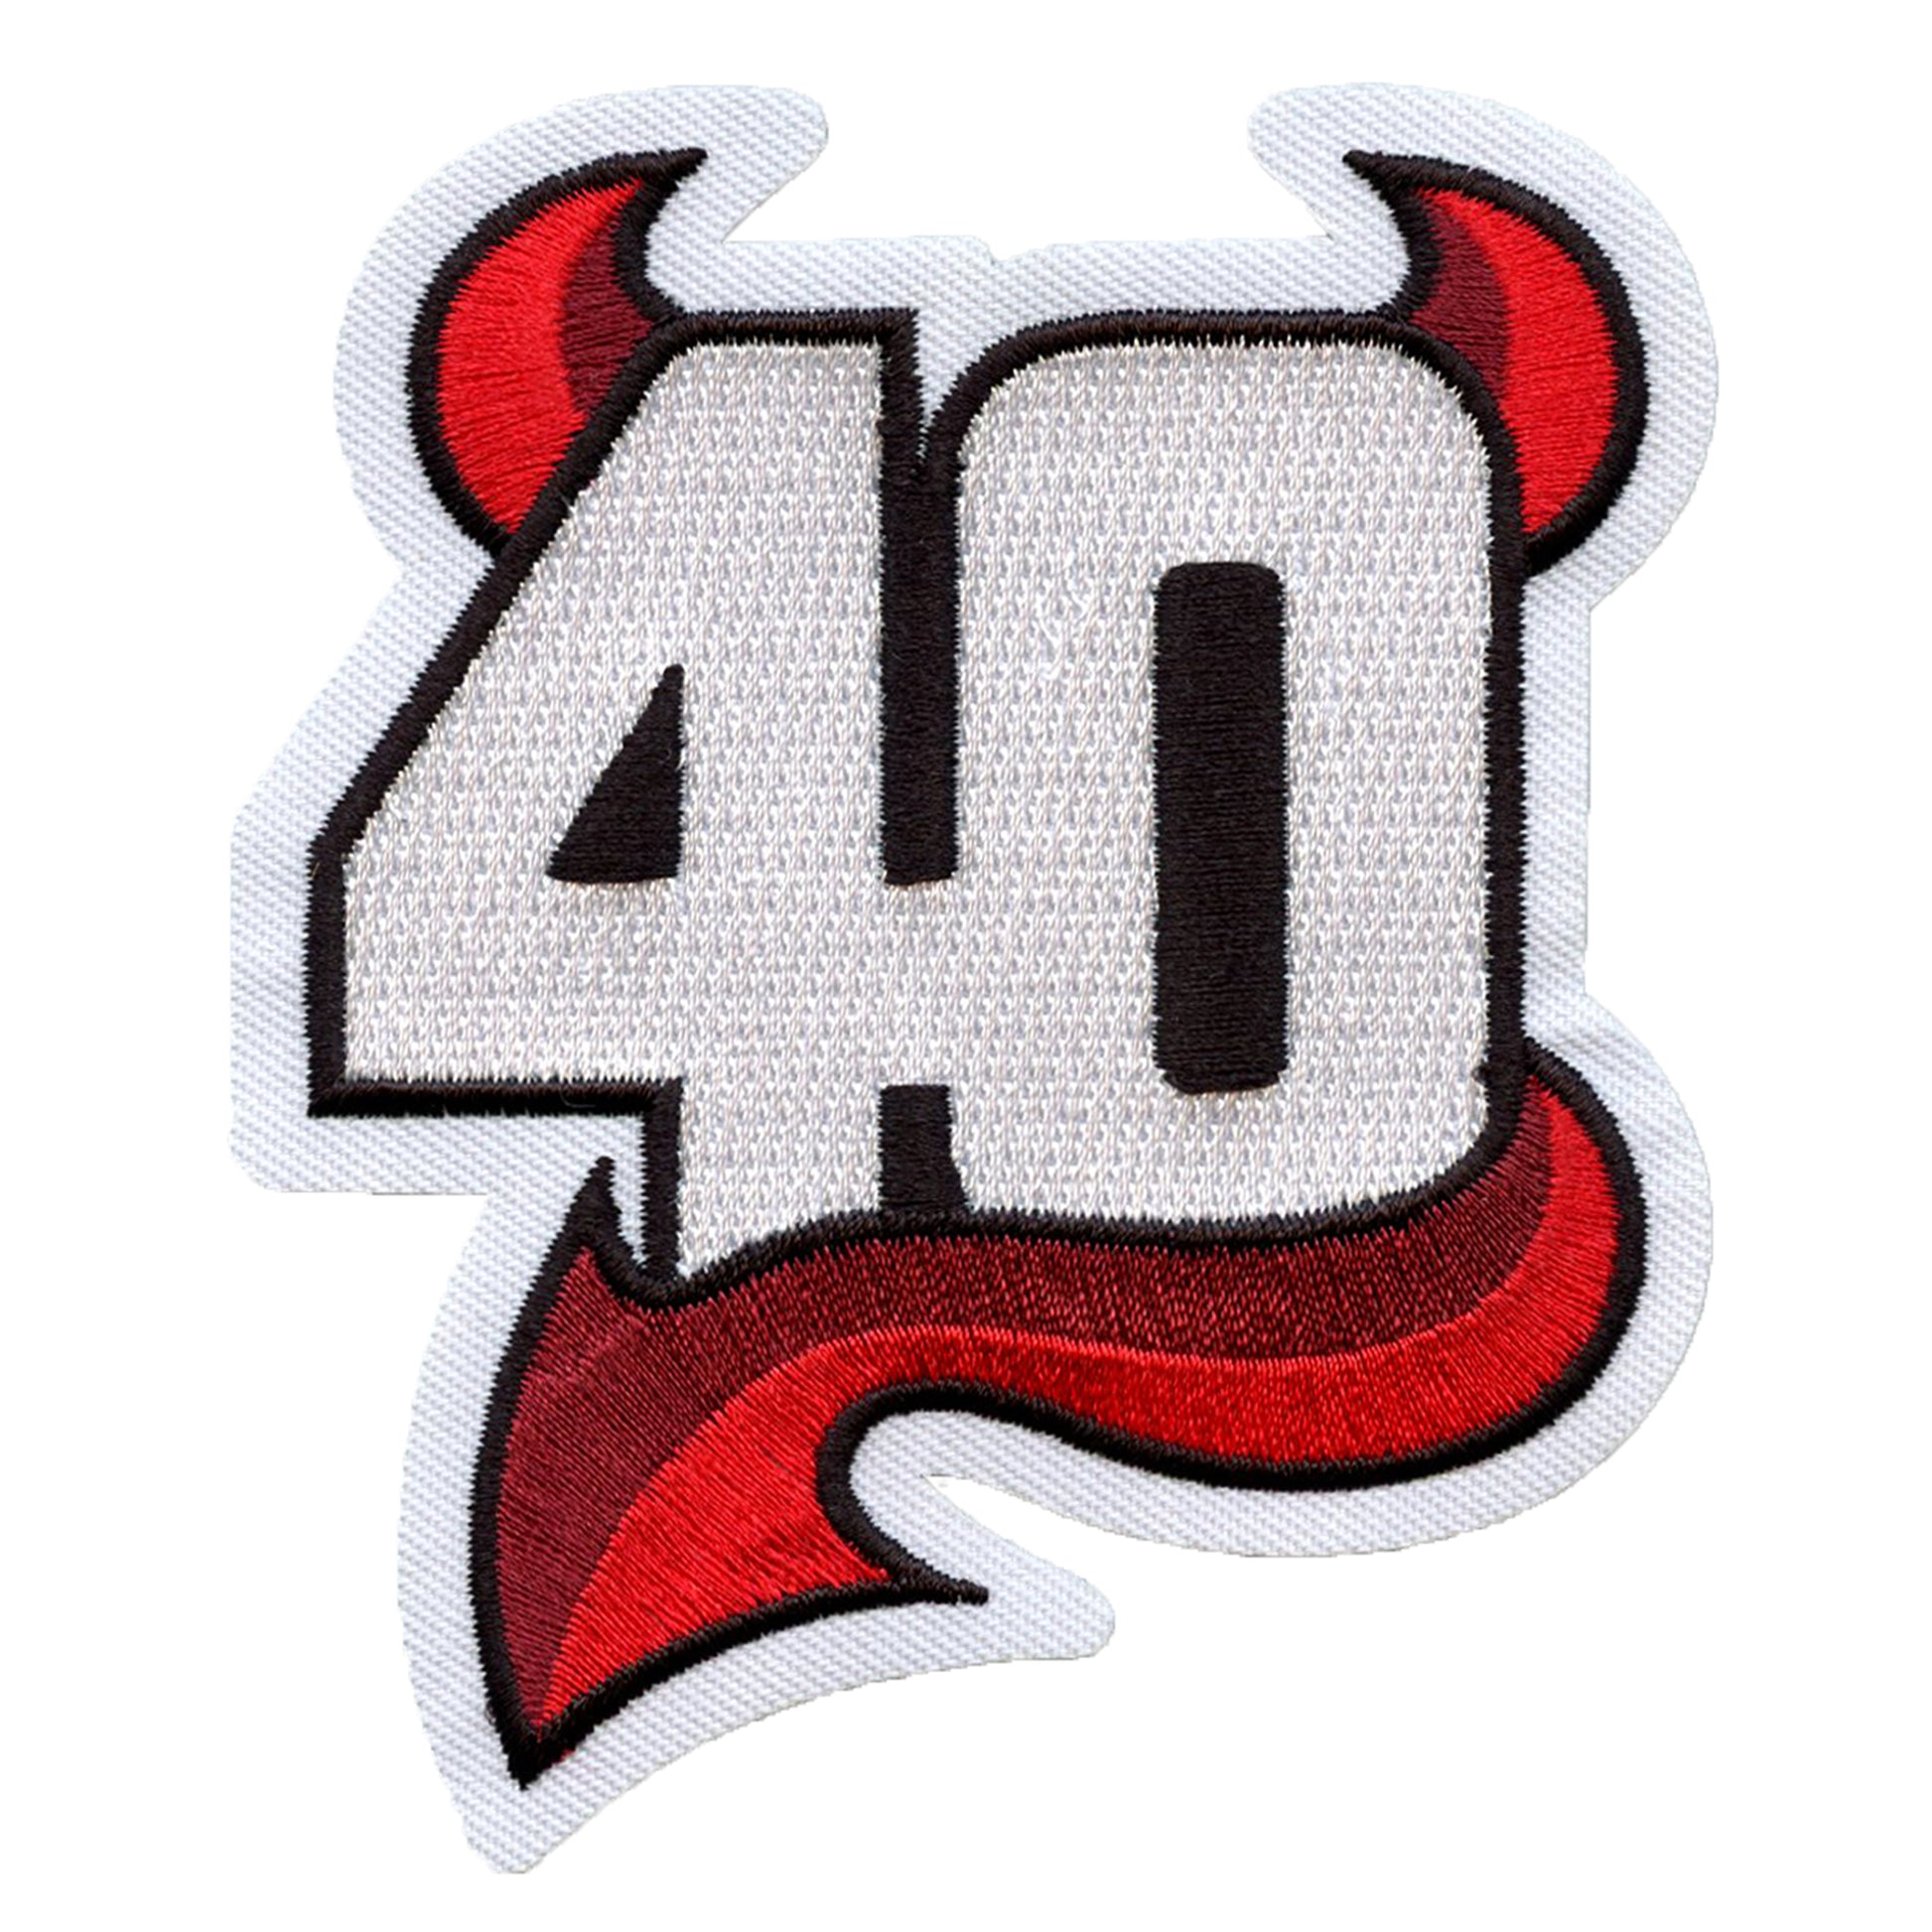 New Jersey Devils 40th Anniversary Season National Emblem Jersey Patch